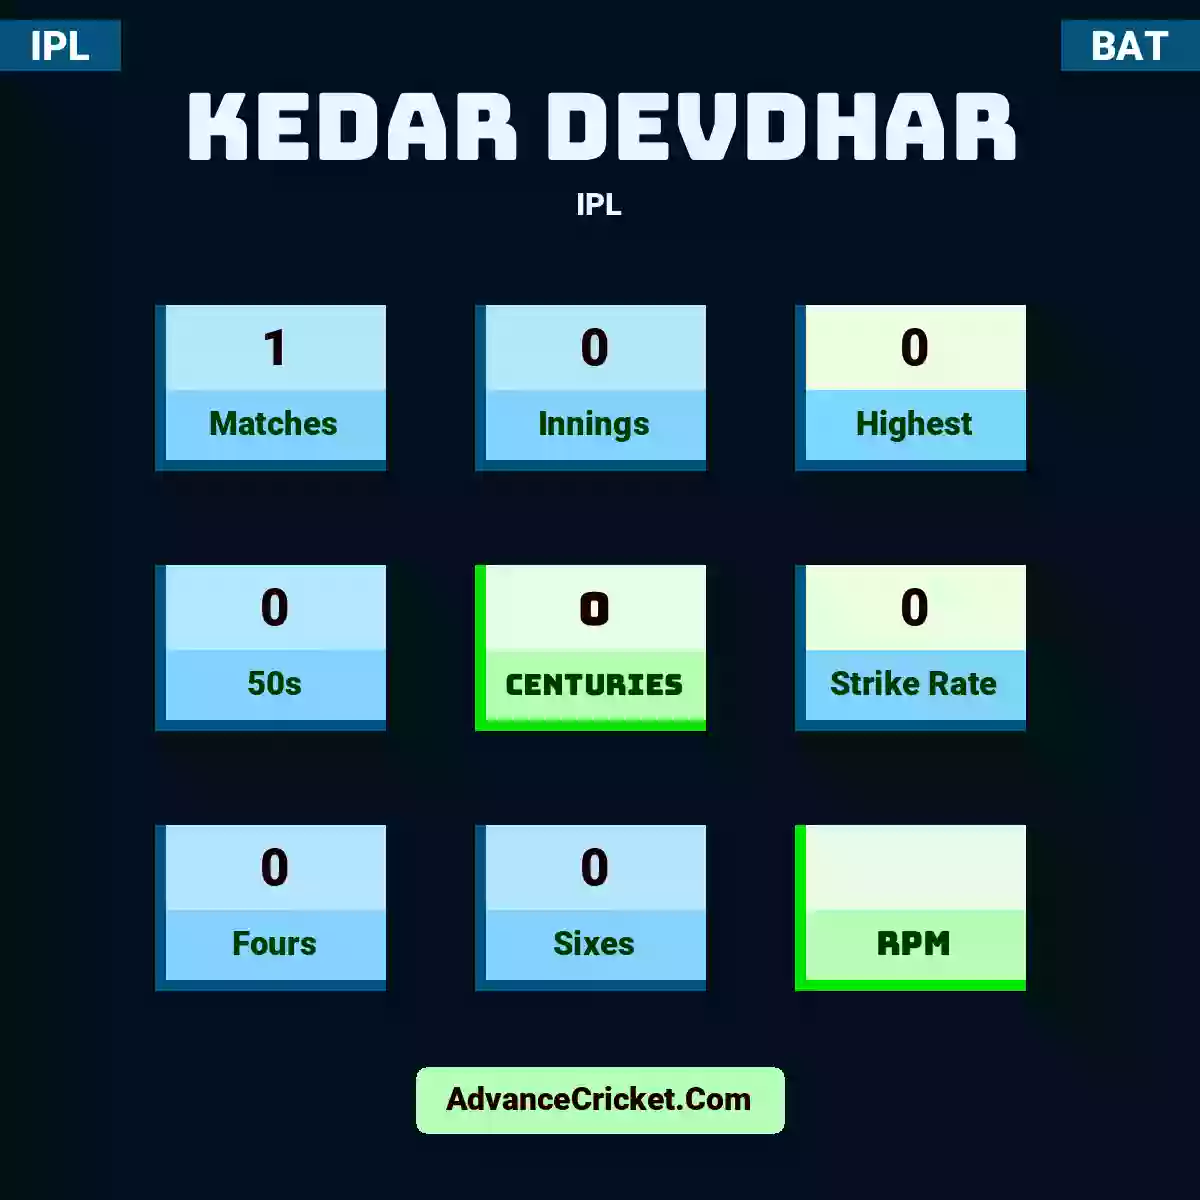 Kedar Devdhar IPL , Kedar Devdhar played 1 matches, scored 0 runs as highest, 0 half-centuries, and 0 centuries, with a strike rate of 0. K.Devdhar hit 0 fours and 0 sixes.